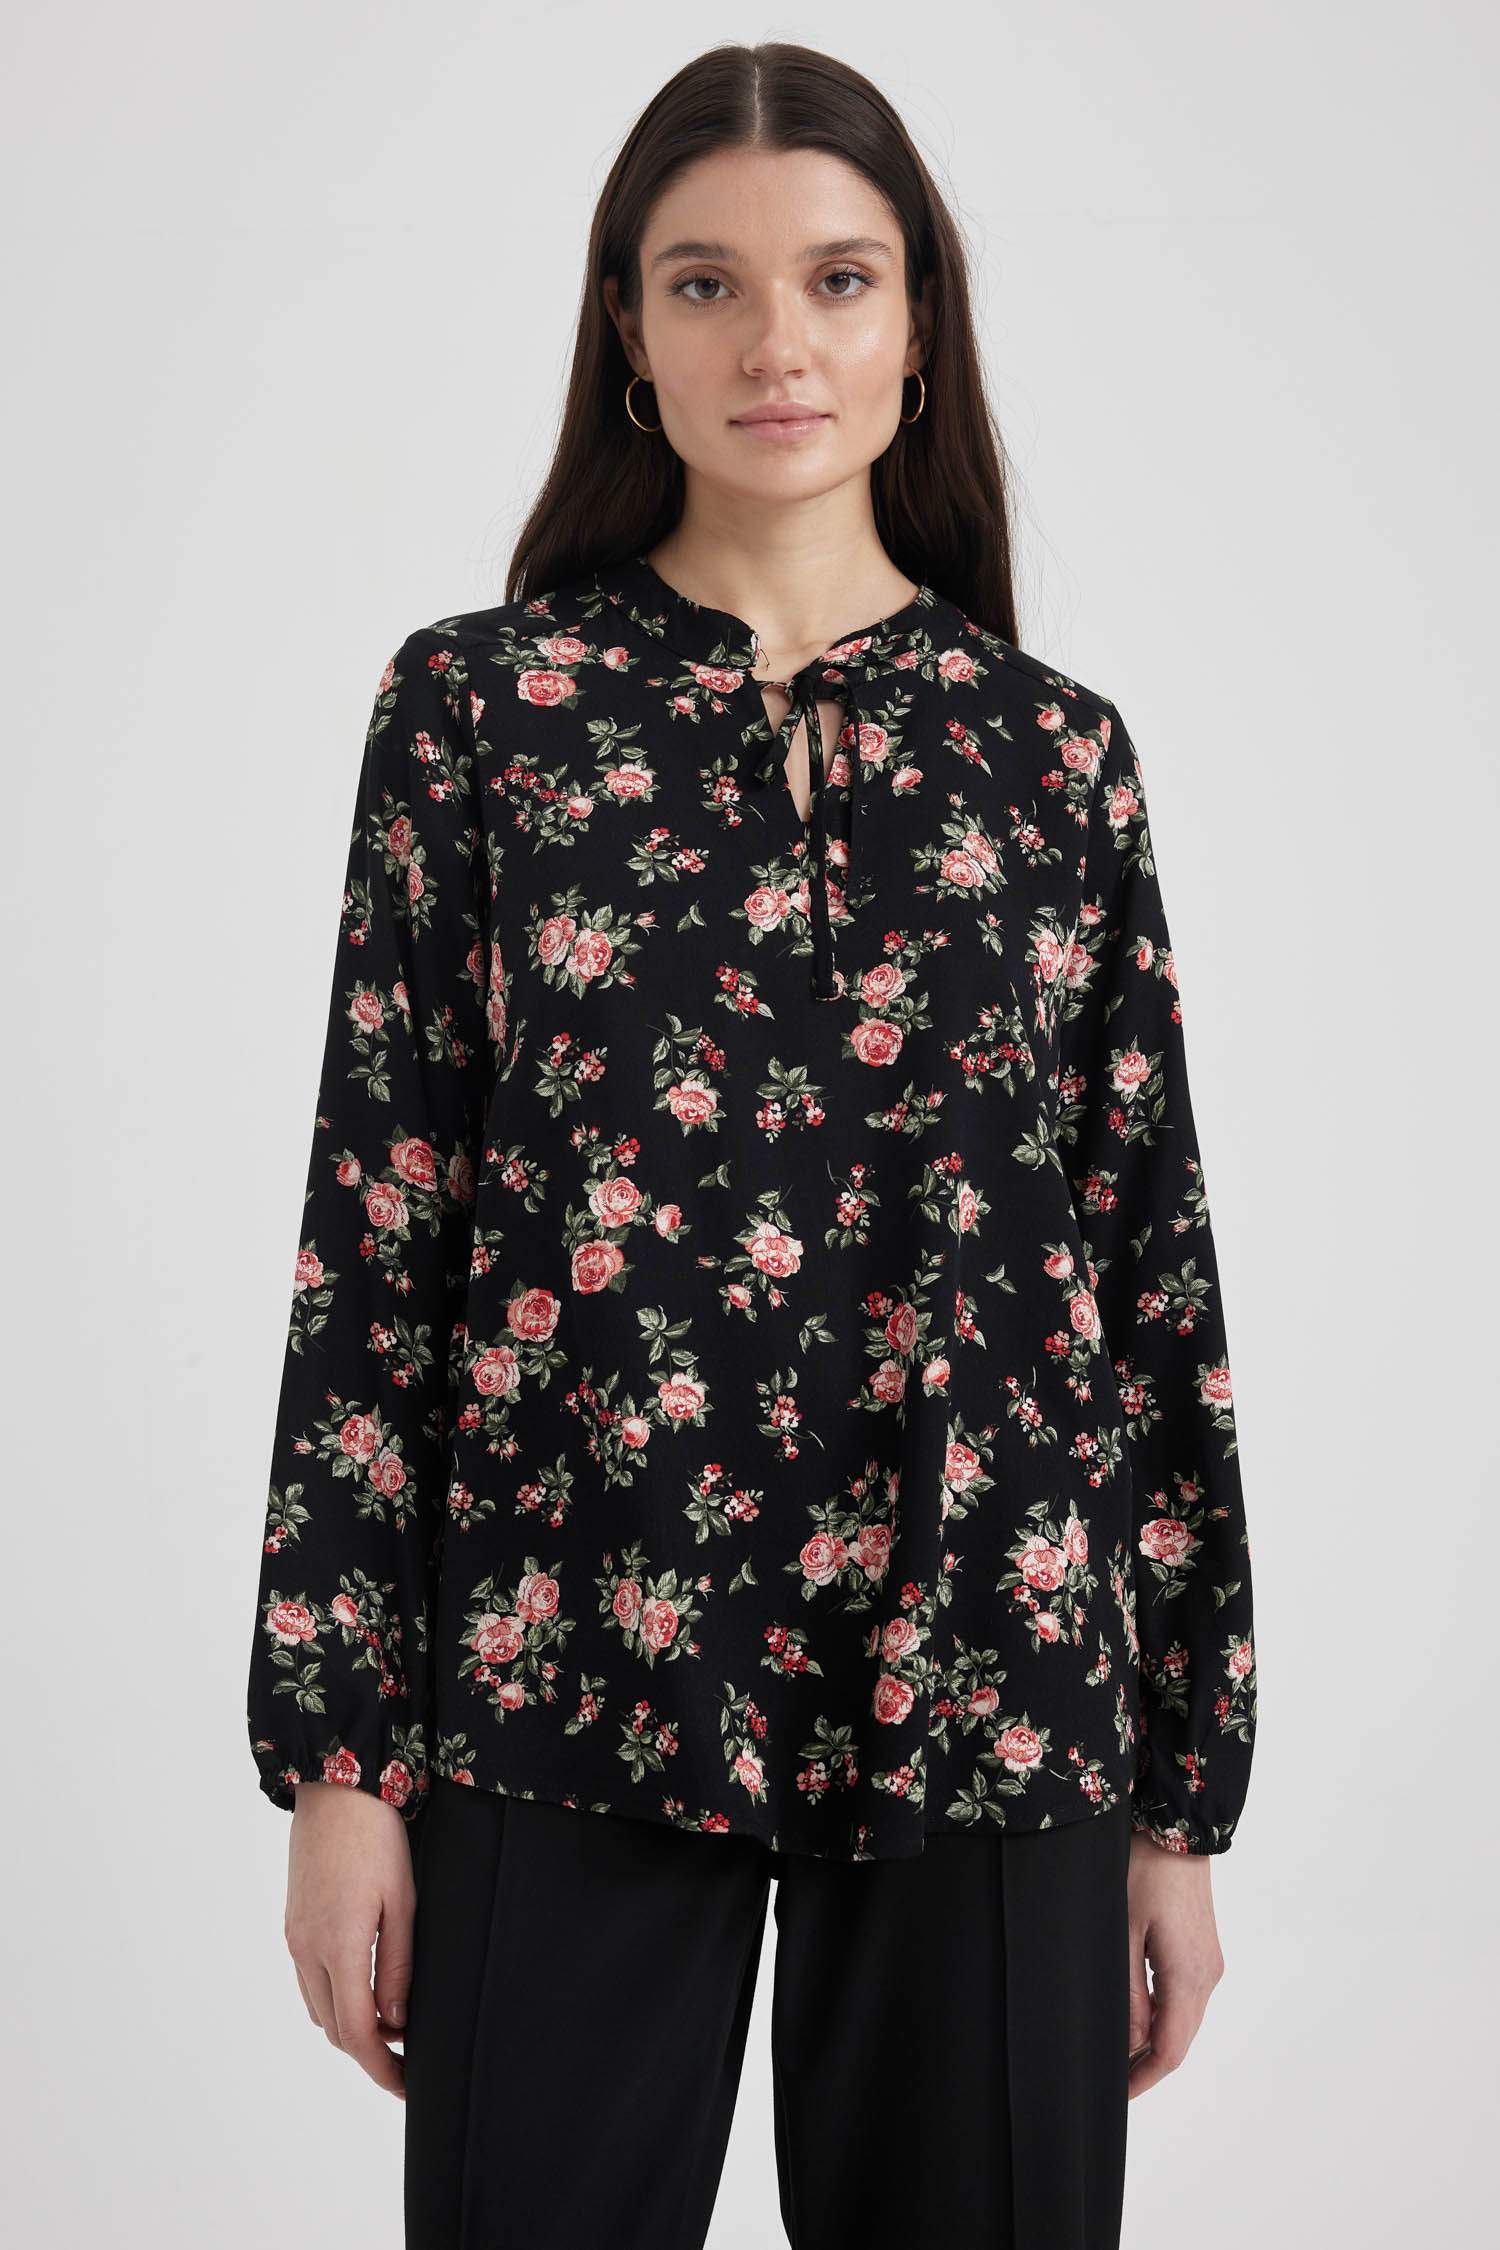 GinaLaura Collection women long sleeve shirt top blouse size EU L